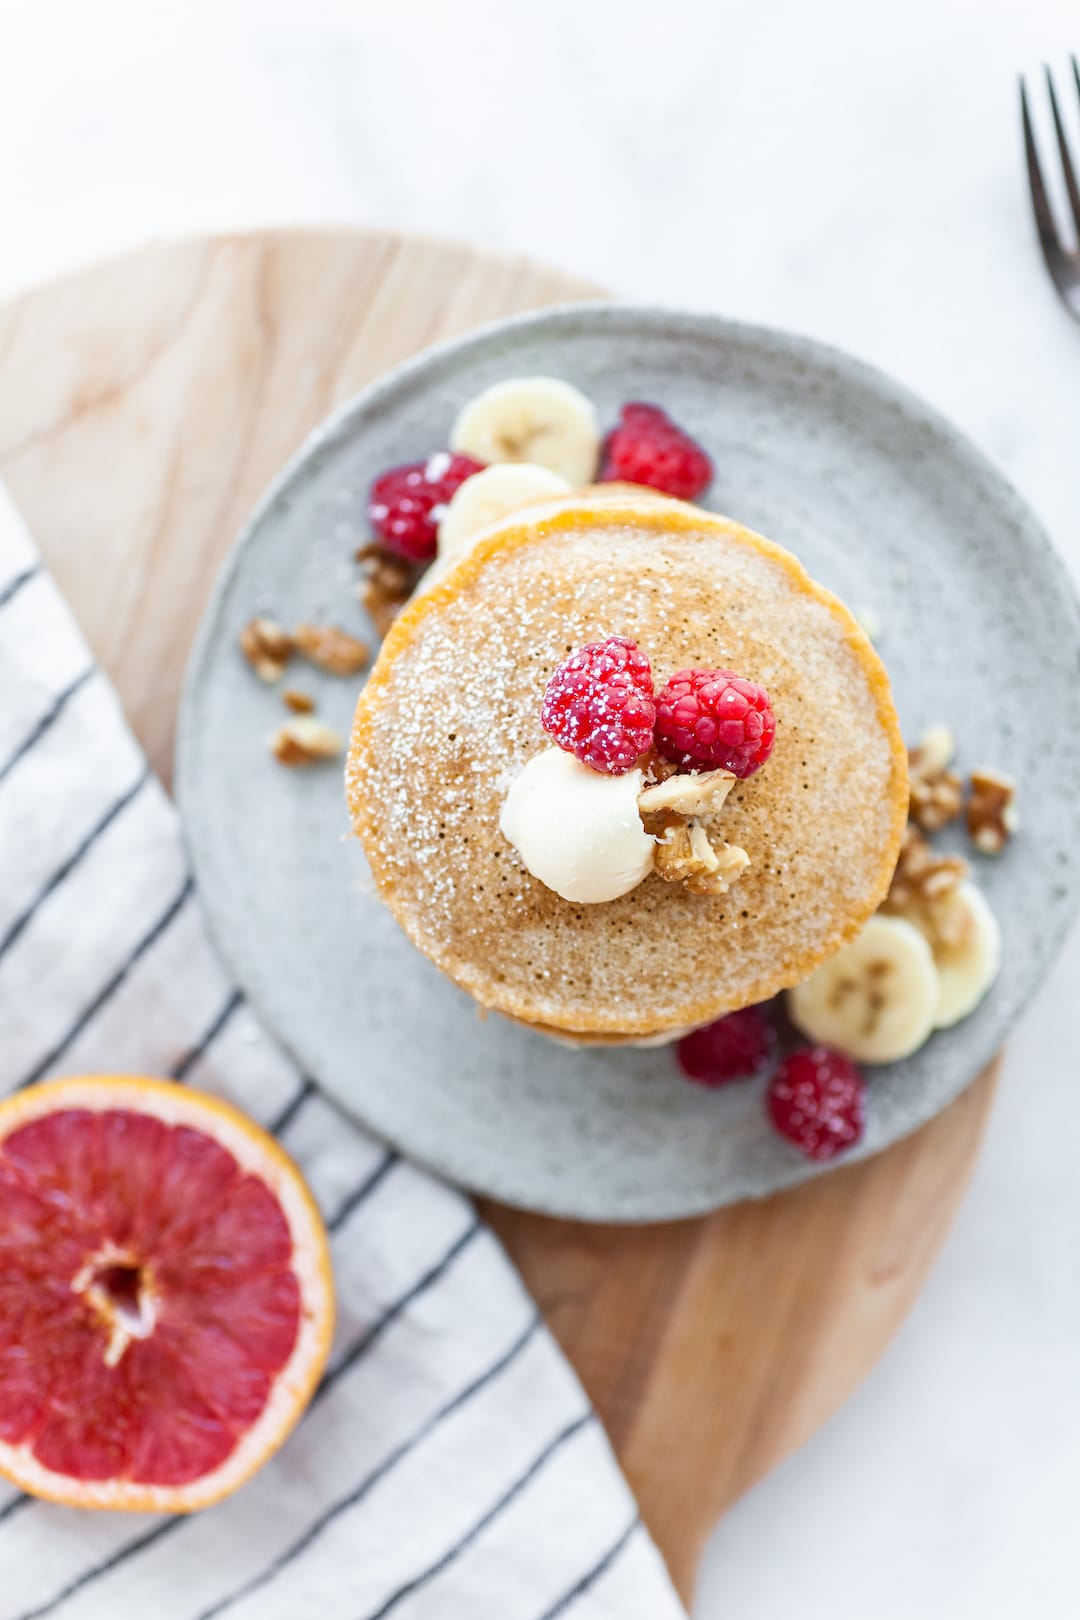 Perfect Vegan Buckwheat Pancakes with raspberry garnish